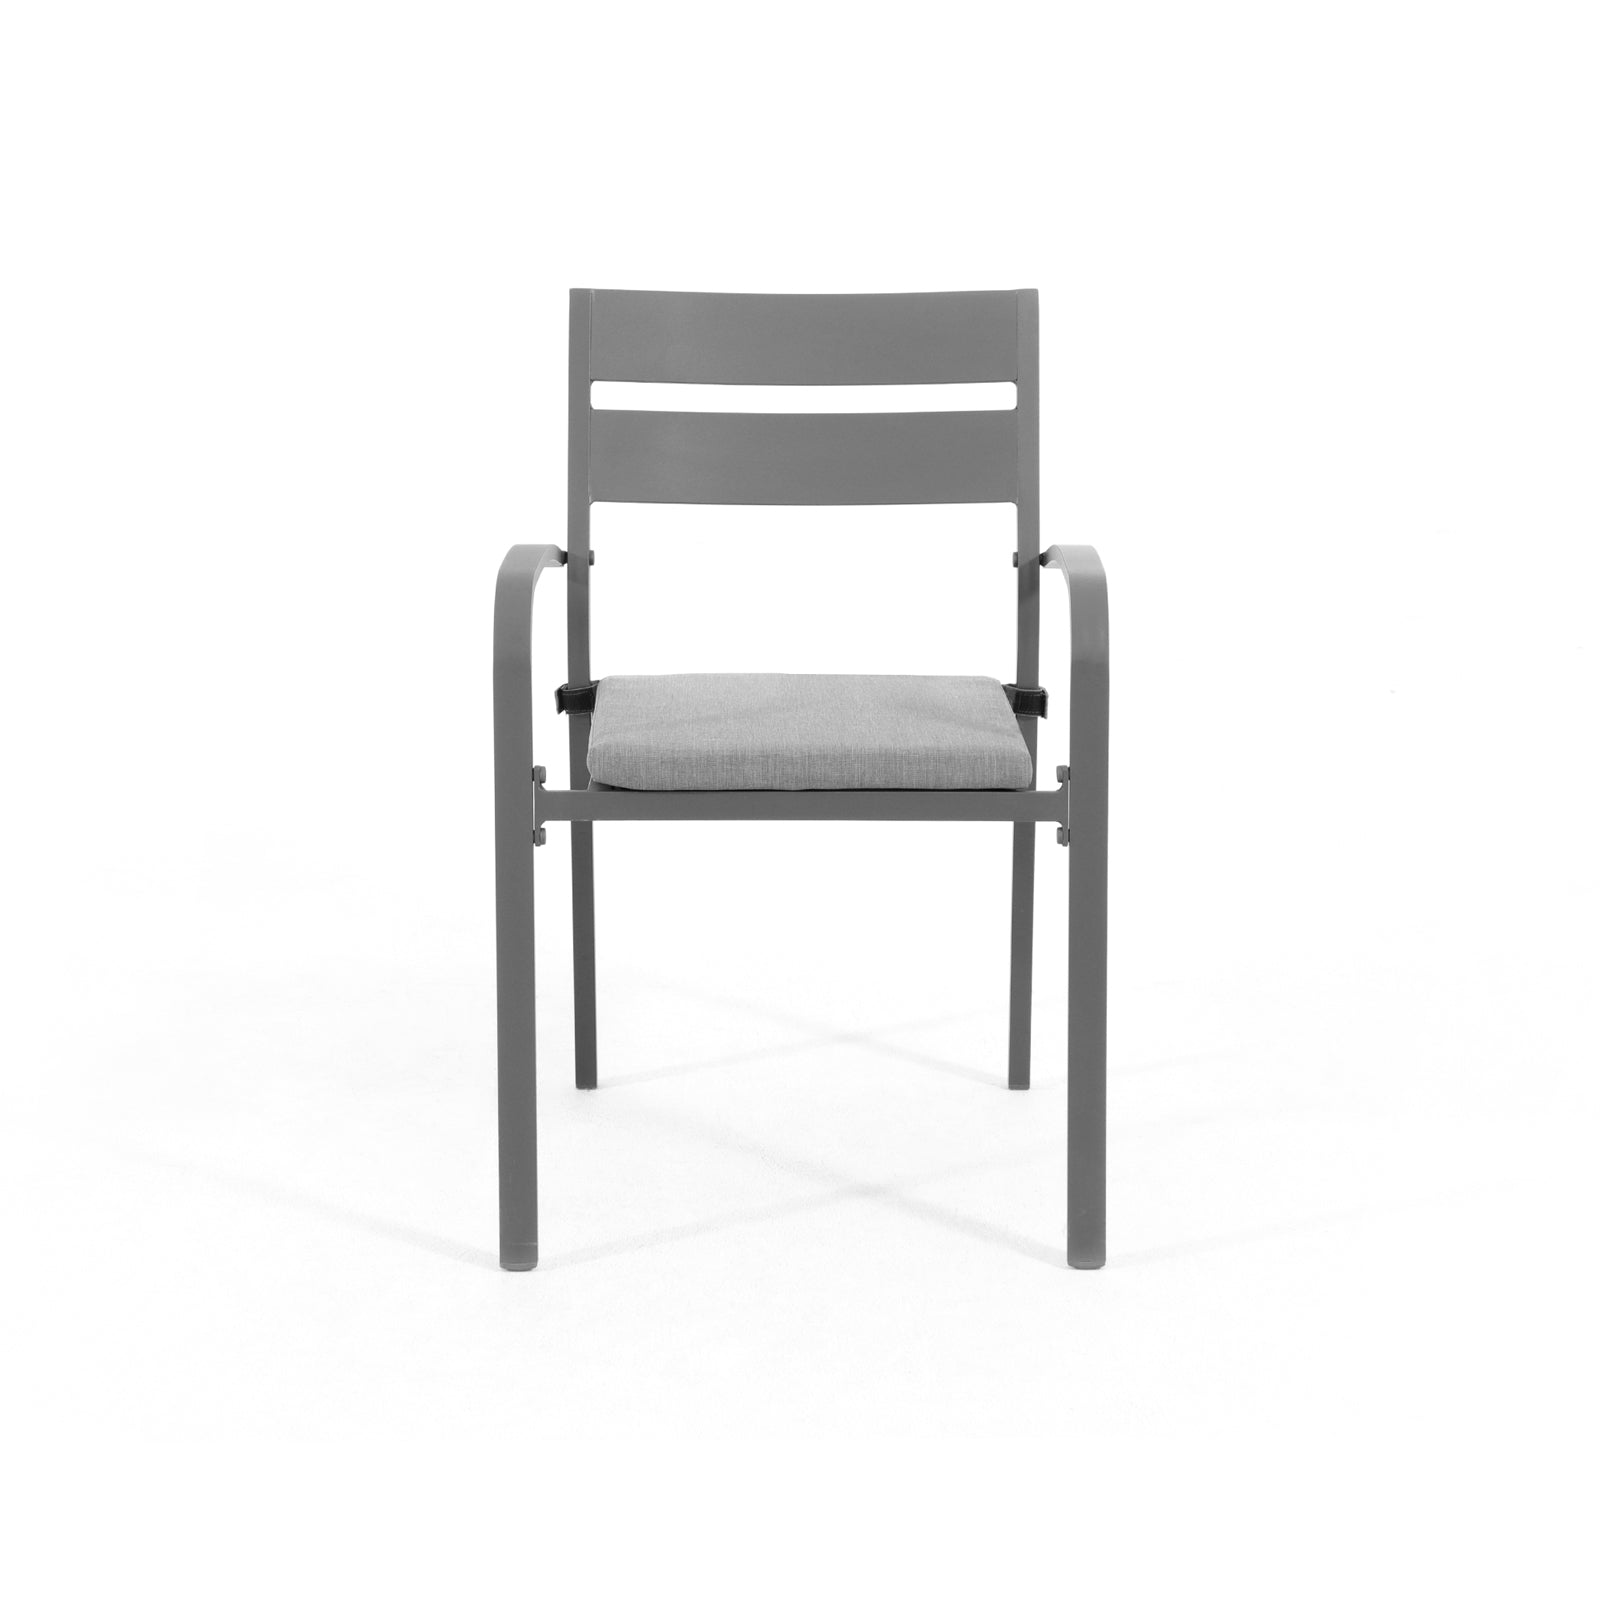 Salina Modern grey aluminum frame outdoor dining chair with grey cushions, front view - Jardina Furniture